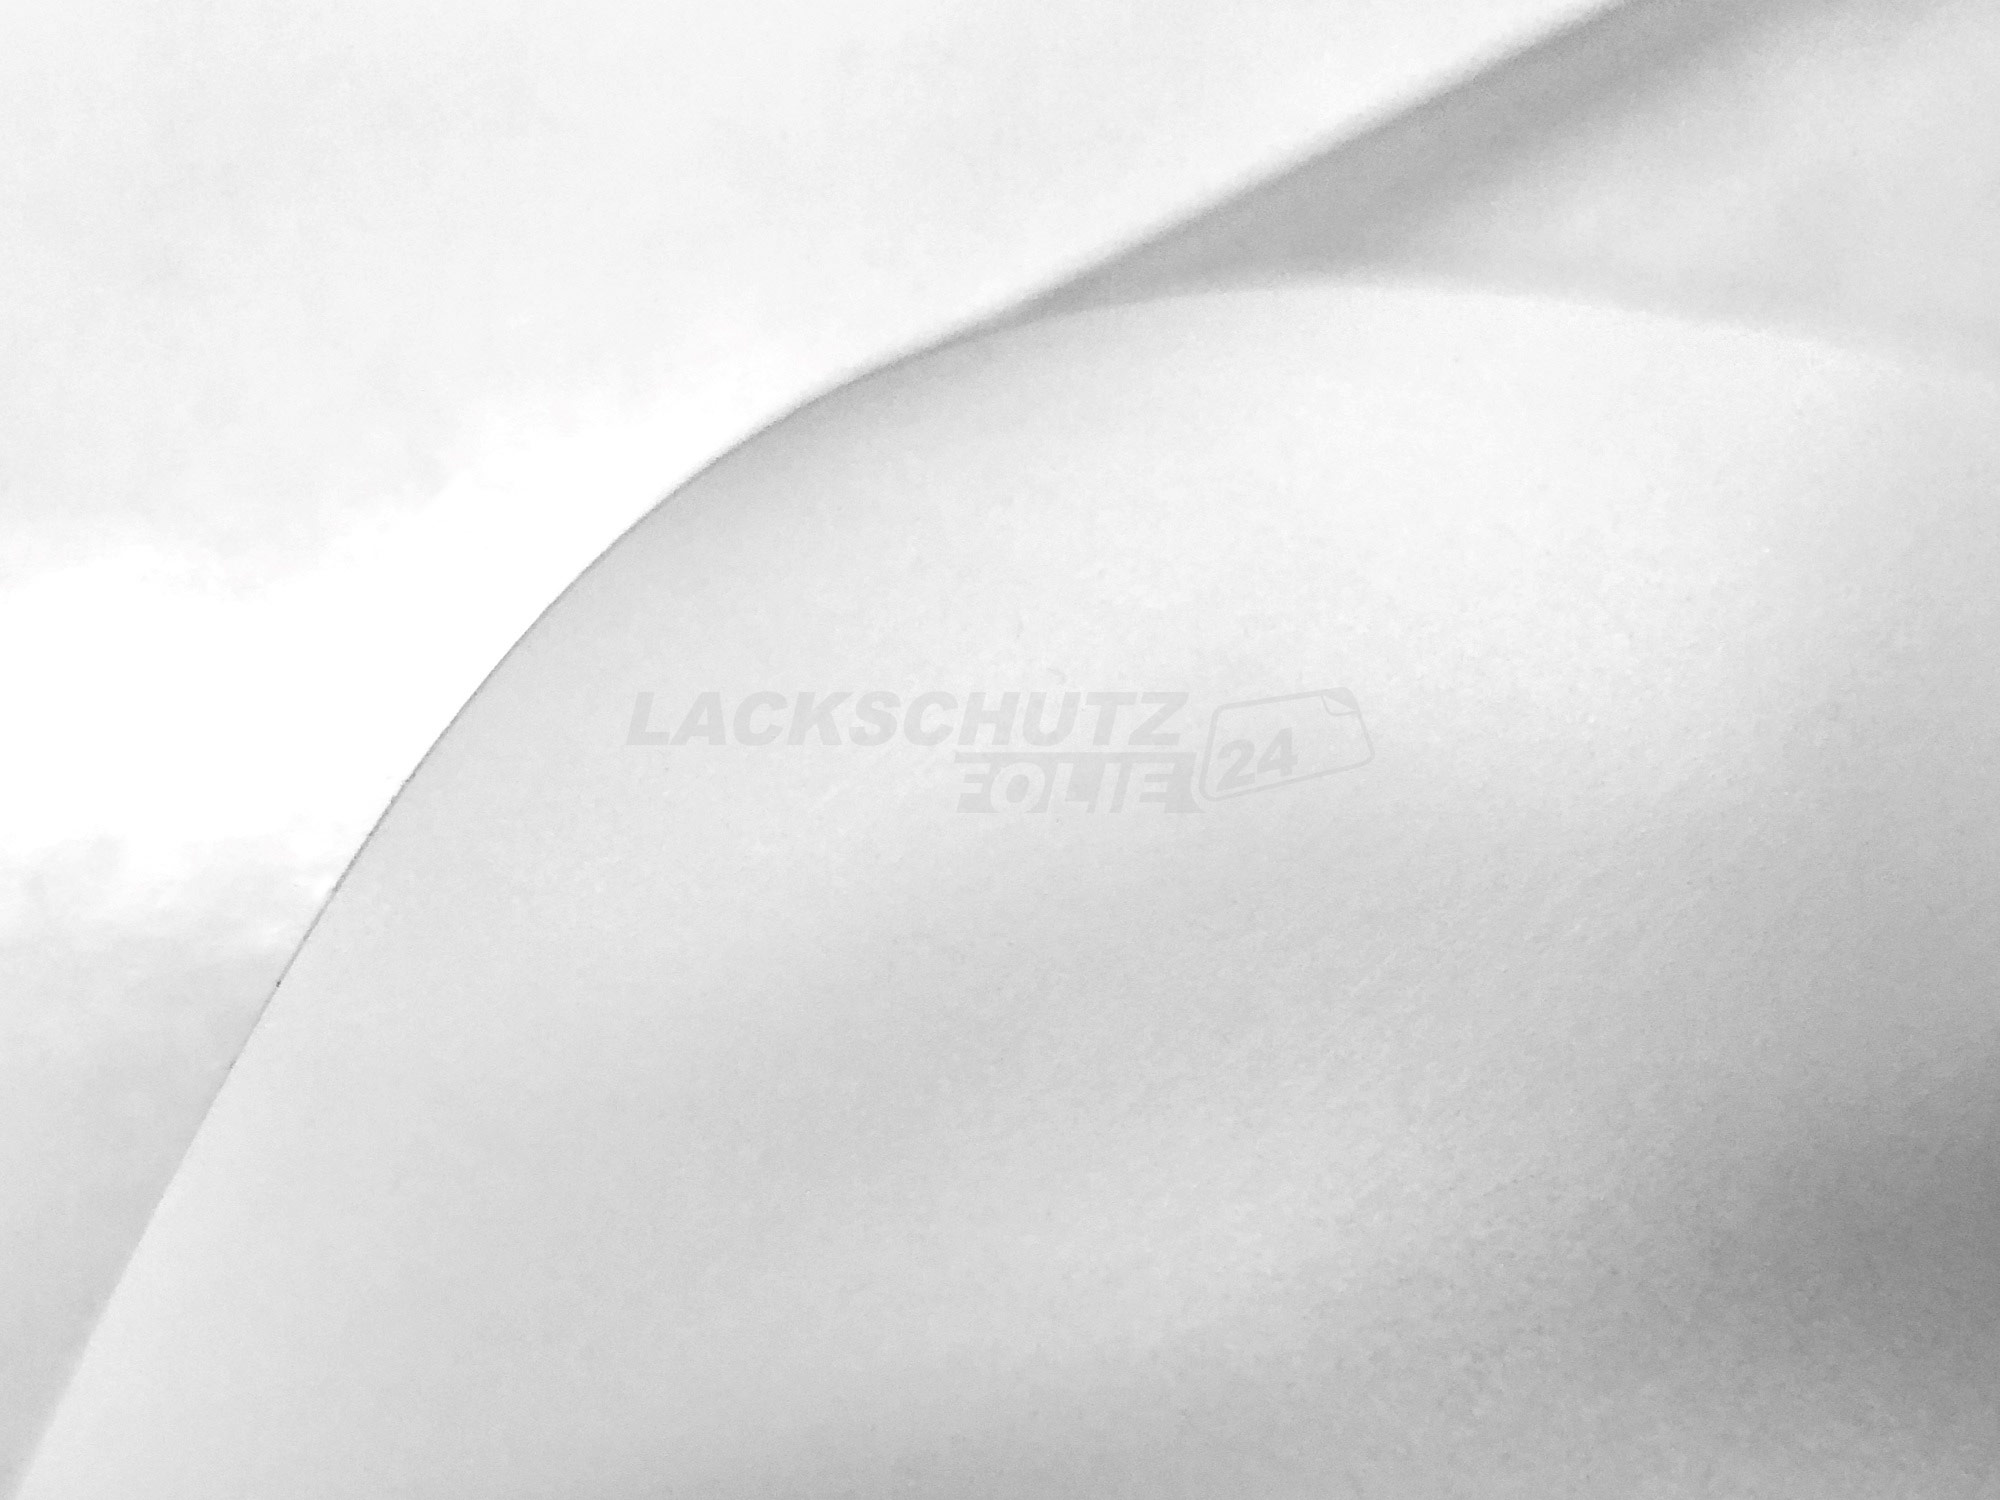 Ladekantenschutzfolie - Transparent Glatt MATT 110 µm stark  für Audi A6 Limousine C8, Typ 4K, ab BJ 03/2018